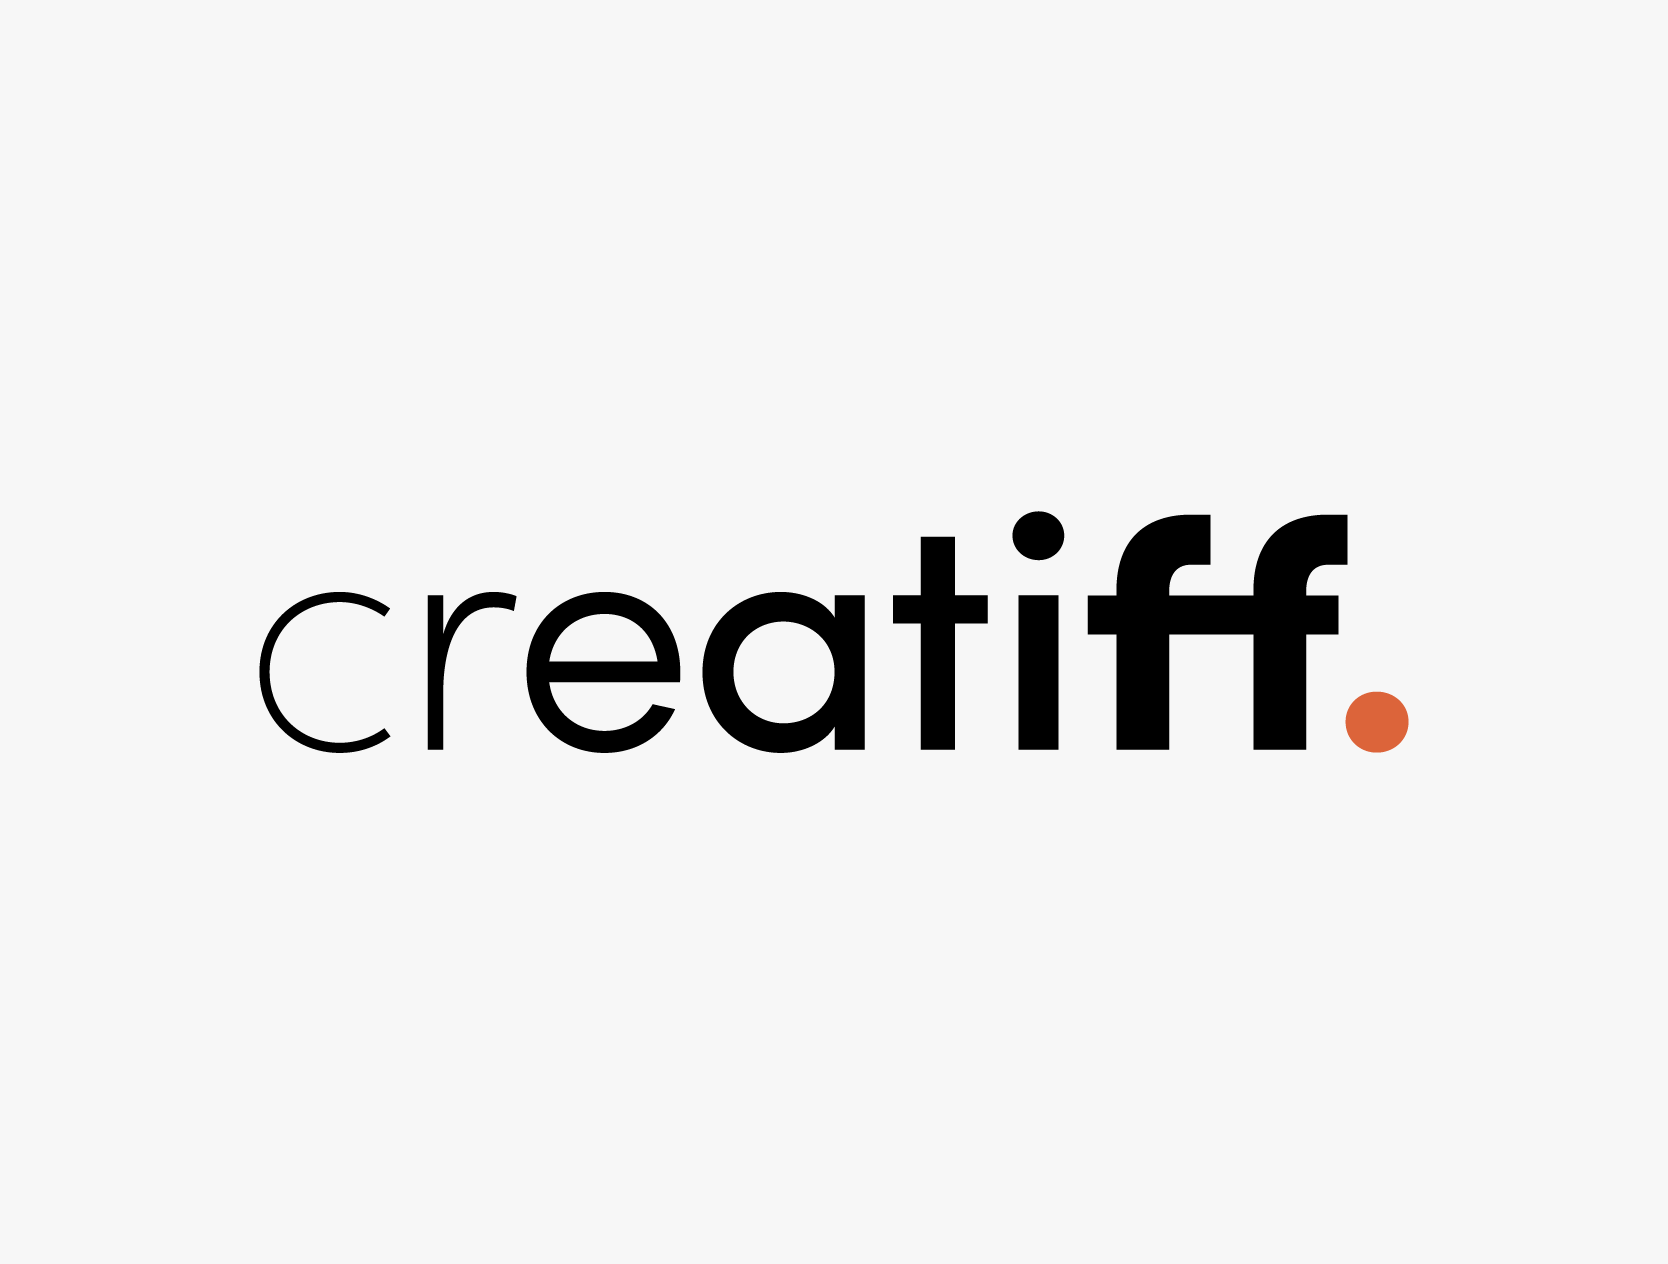 creatiff logo